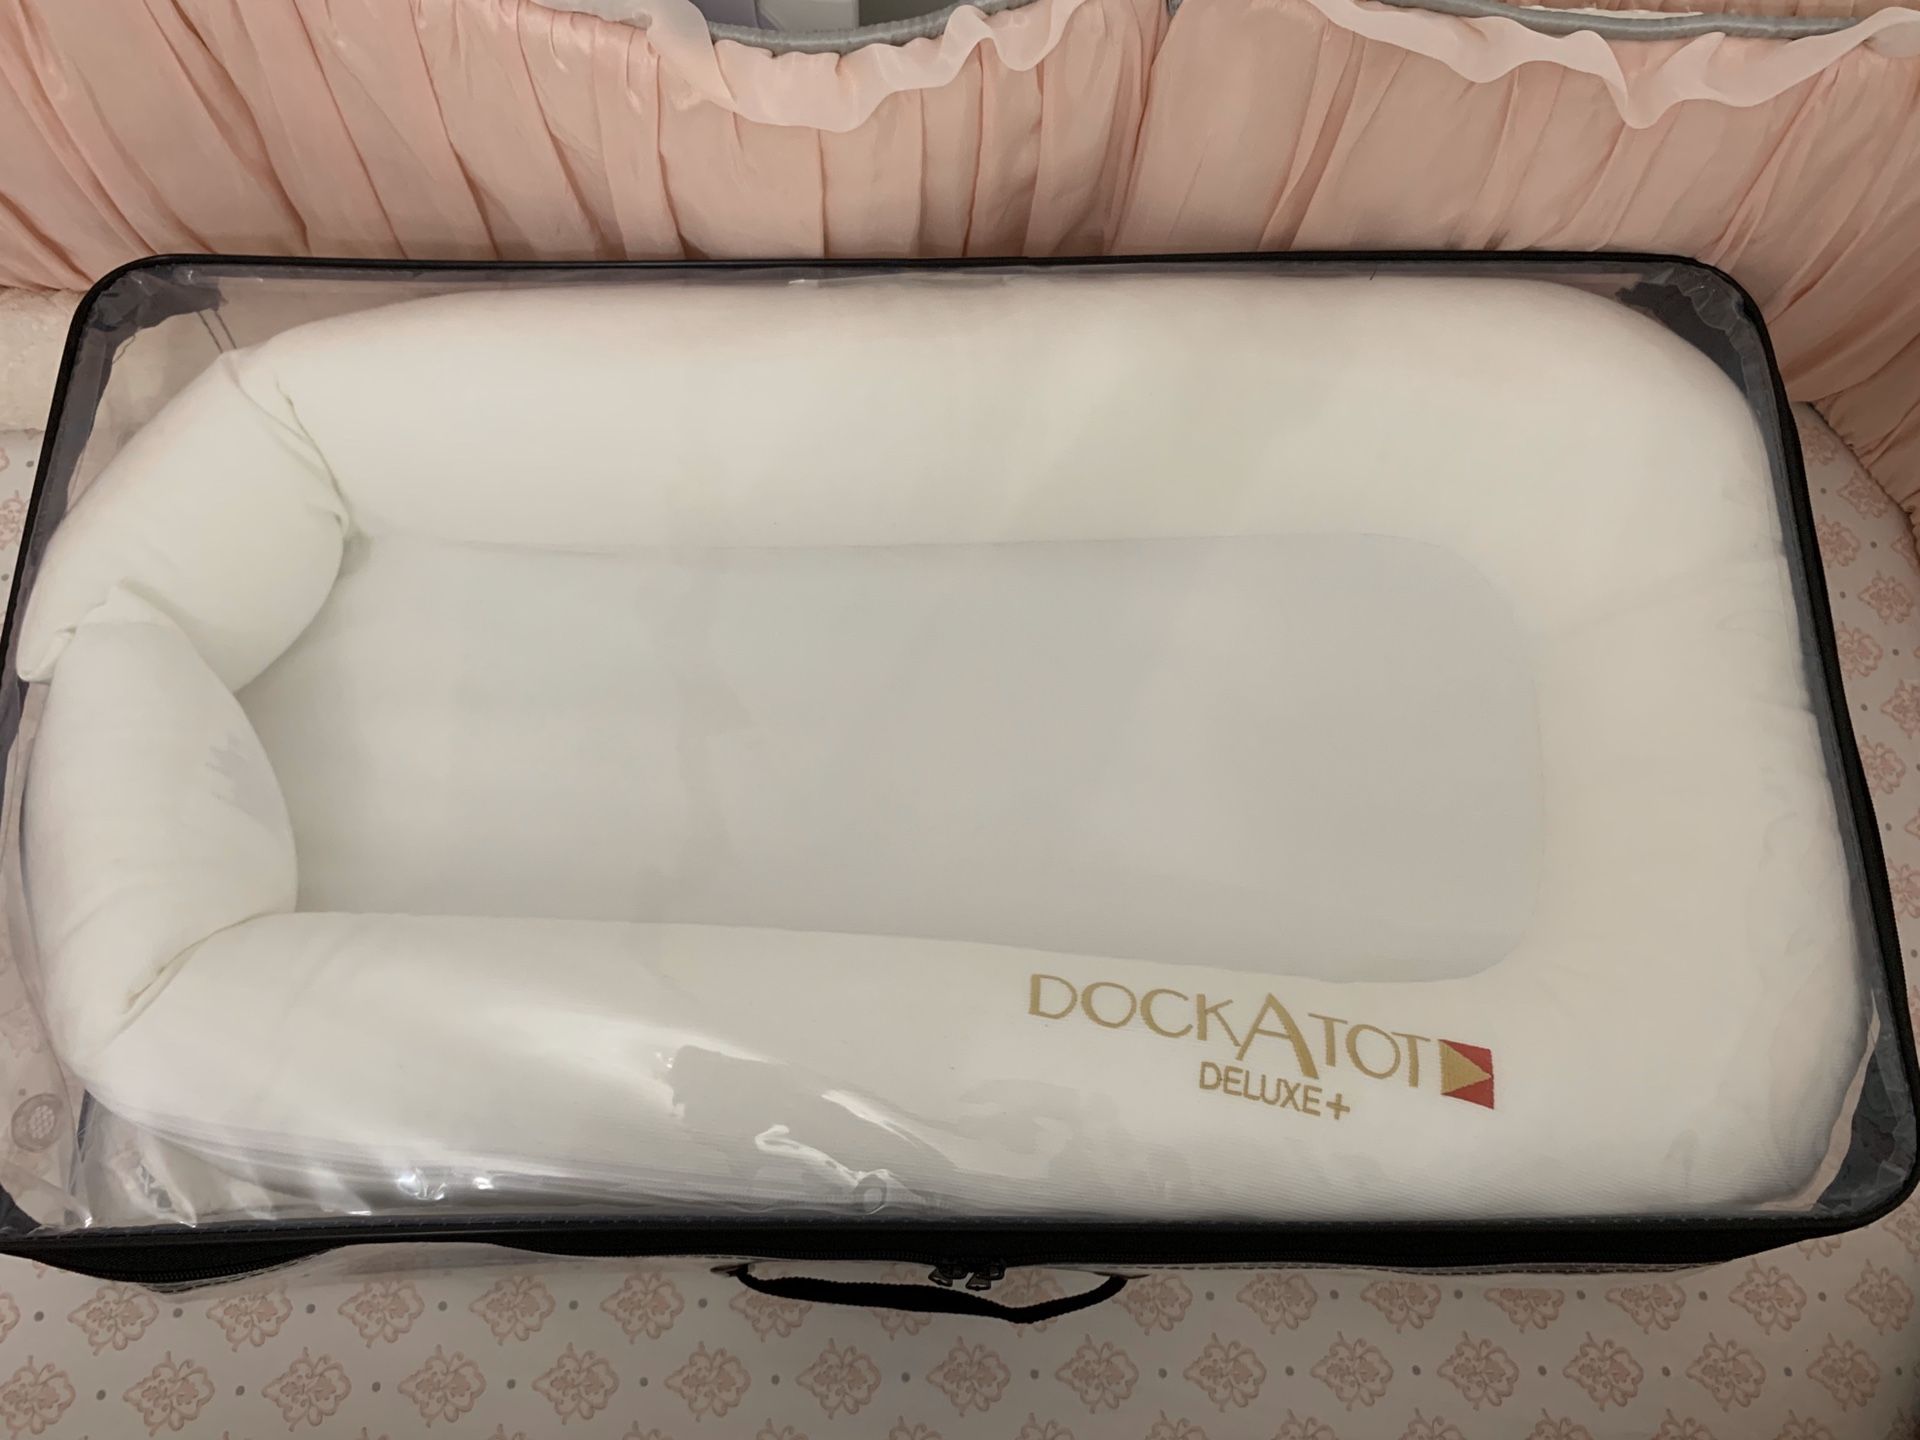 DOCK A TOT deluxe(portable bassinet)